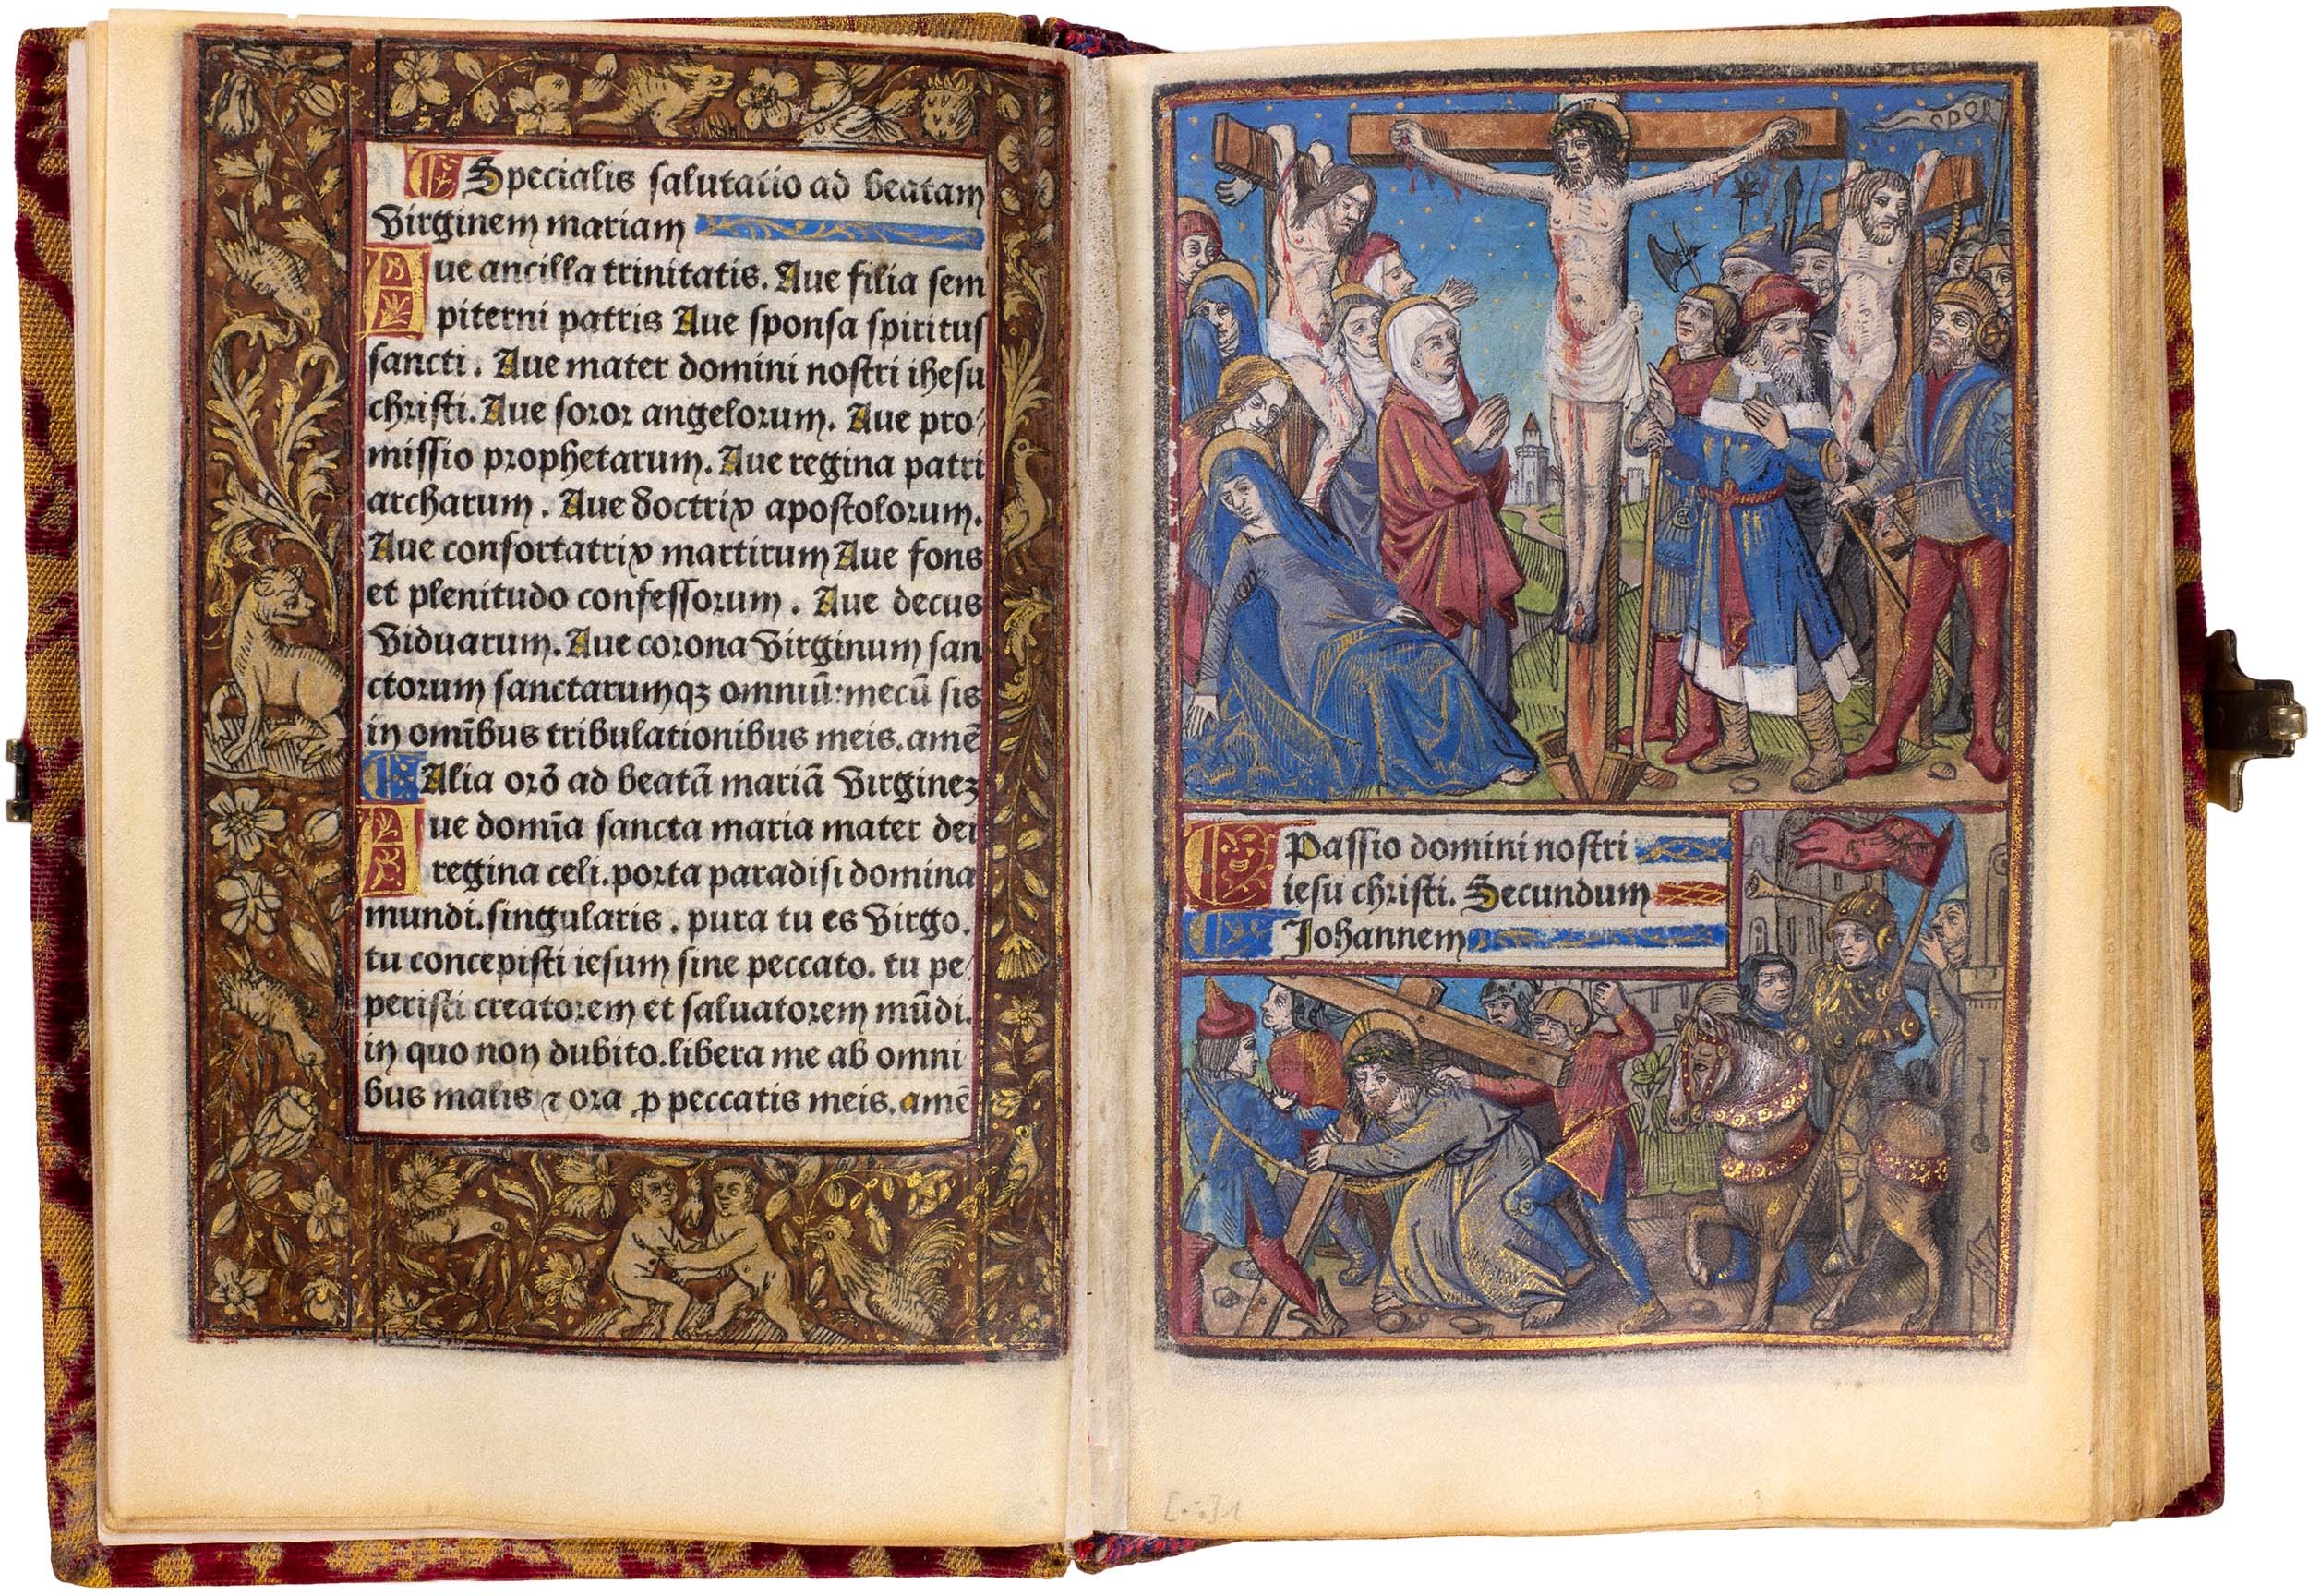 Horae-bmv-1488-gamma-dupre-printed-book-of-hours-danse-macabre-camaieu-dor-illuminated-vellum-copy-11.jpg